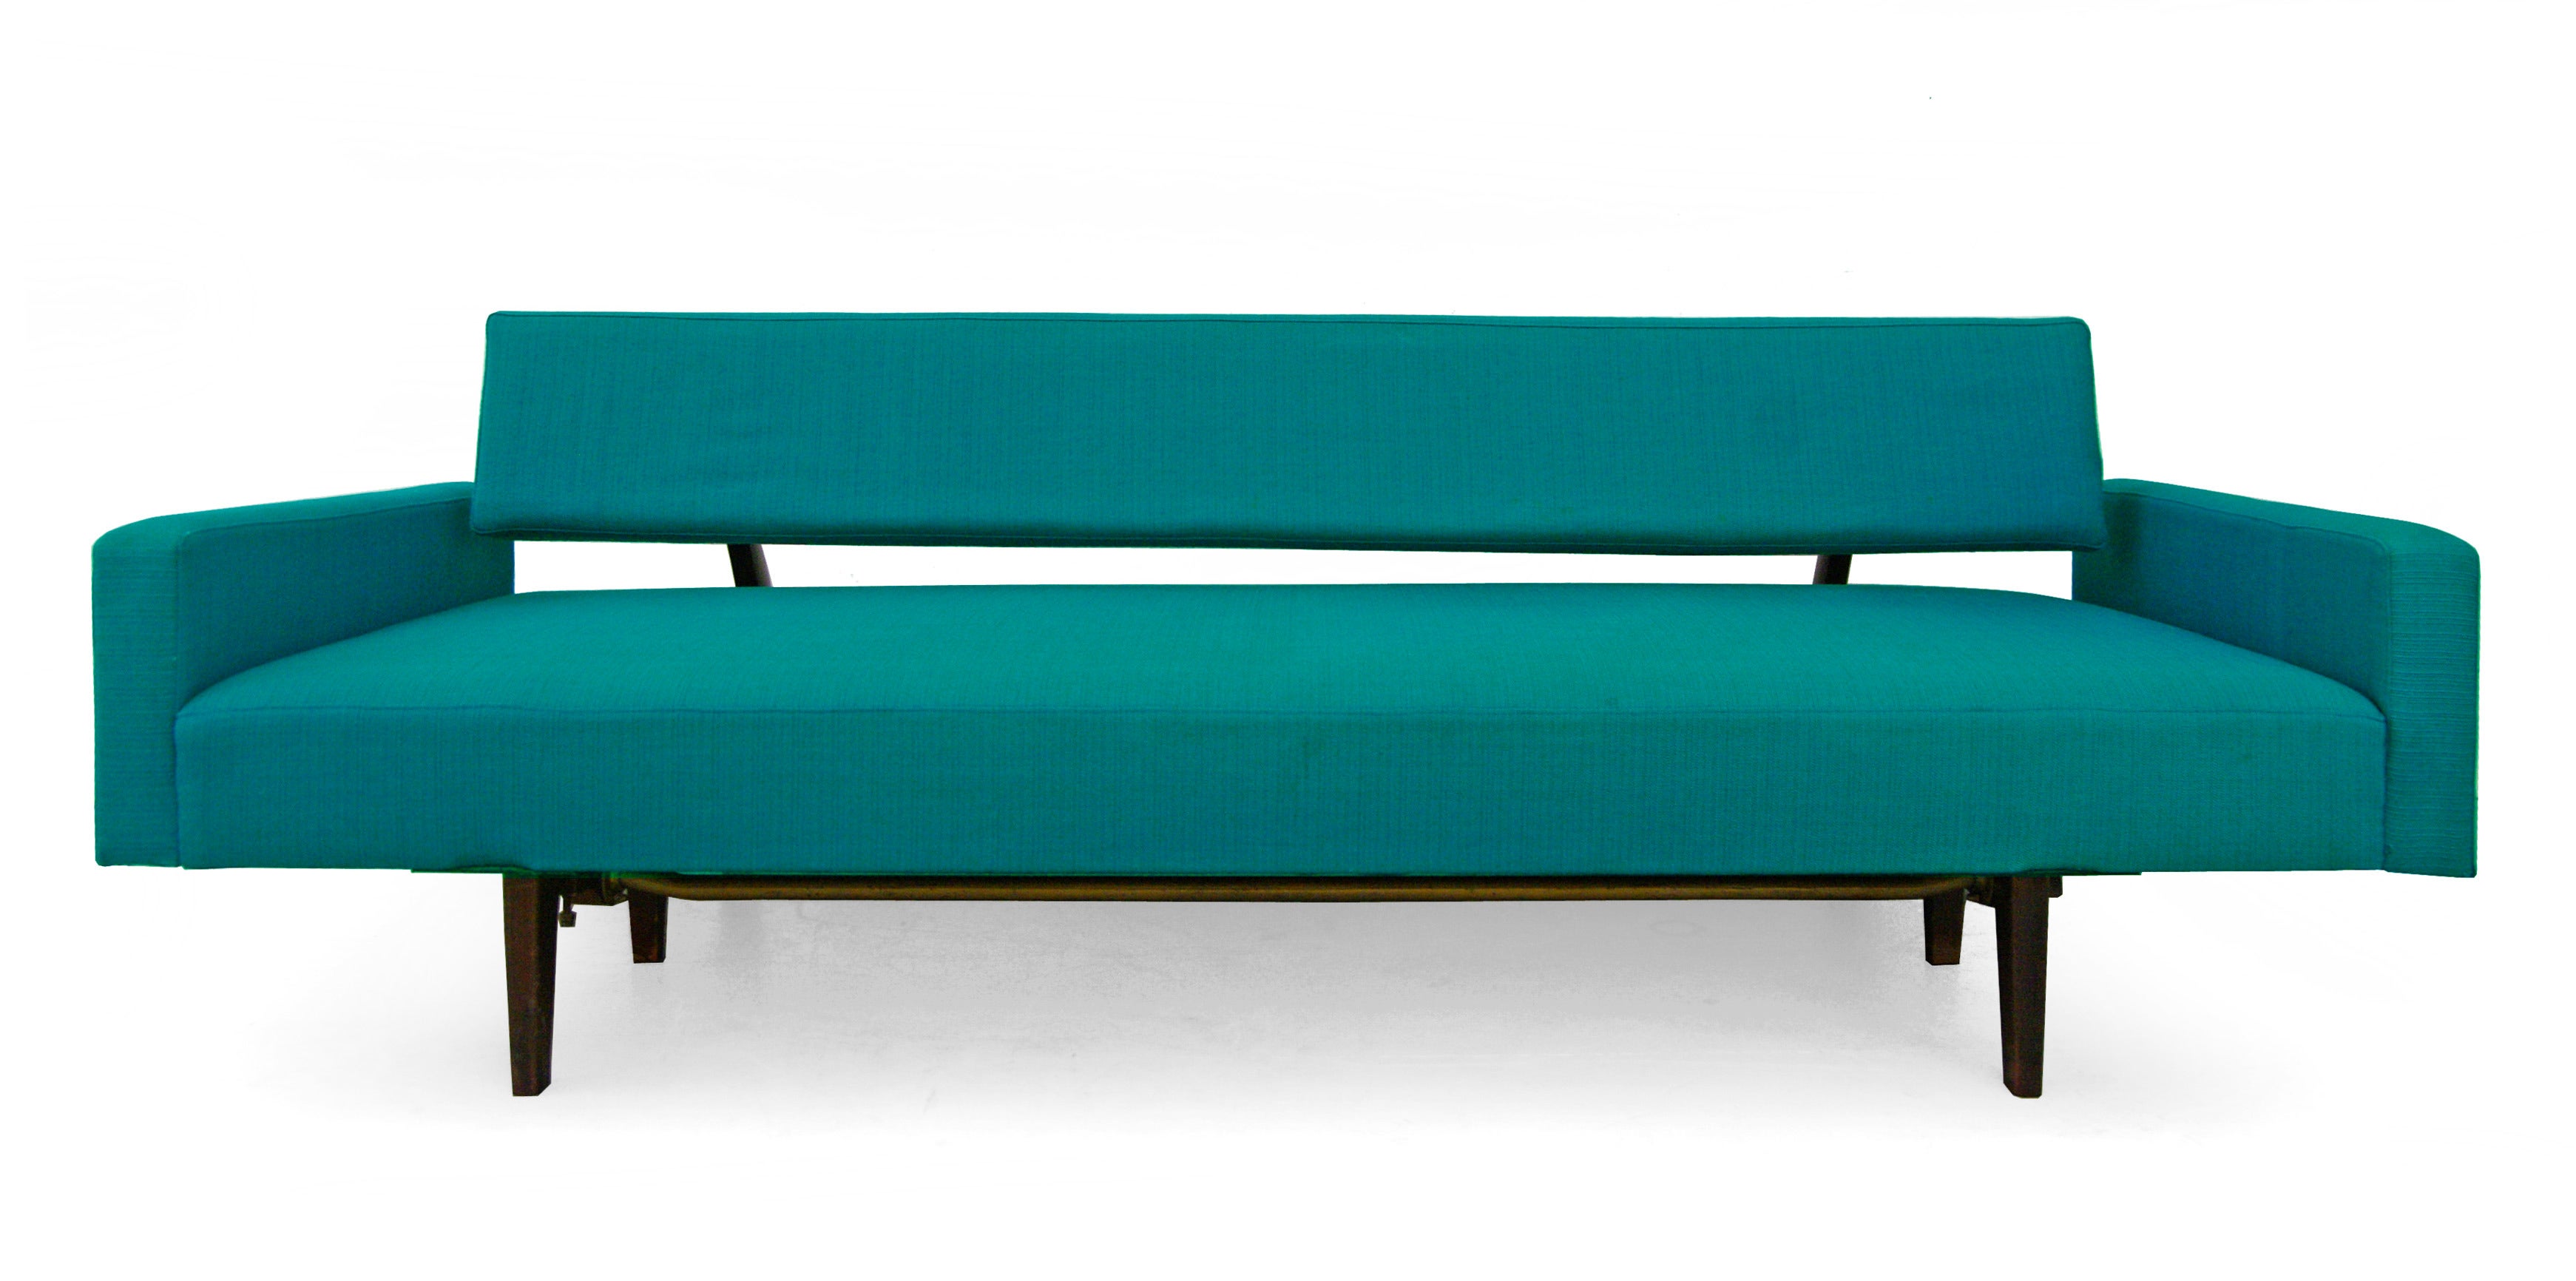 Sofa | Daybed by Honeta 1959 Franz Hohn Germany Teak 60s